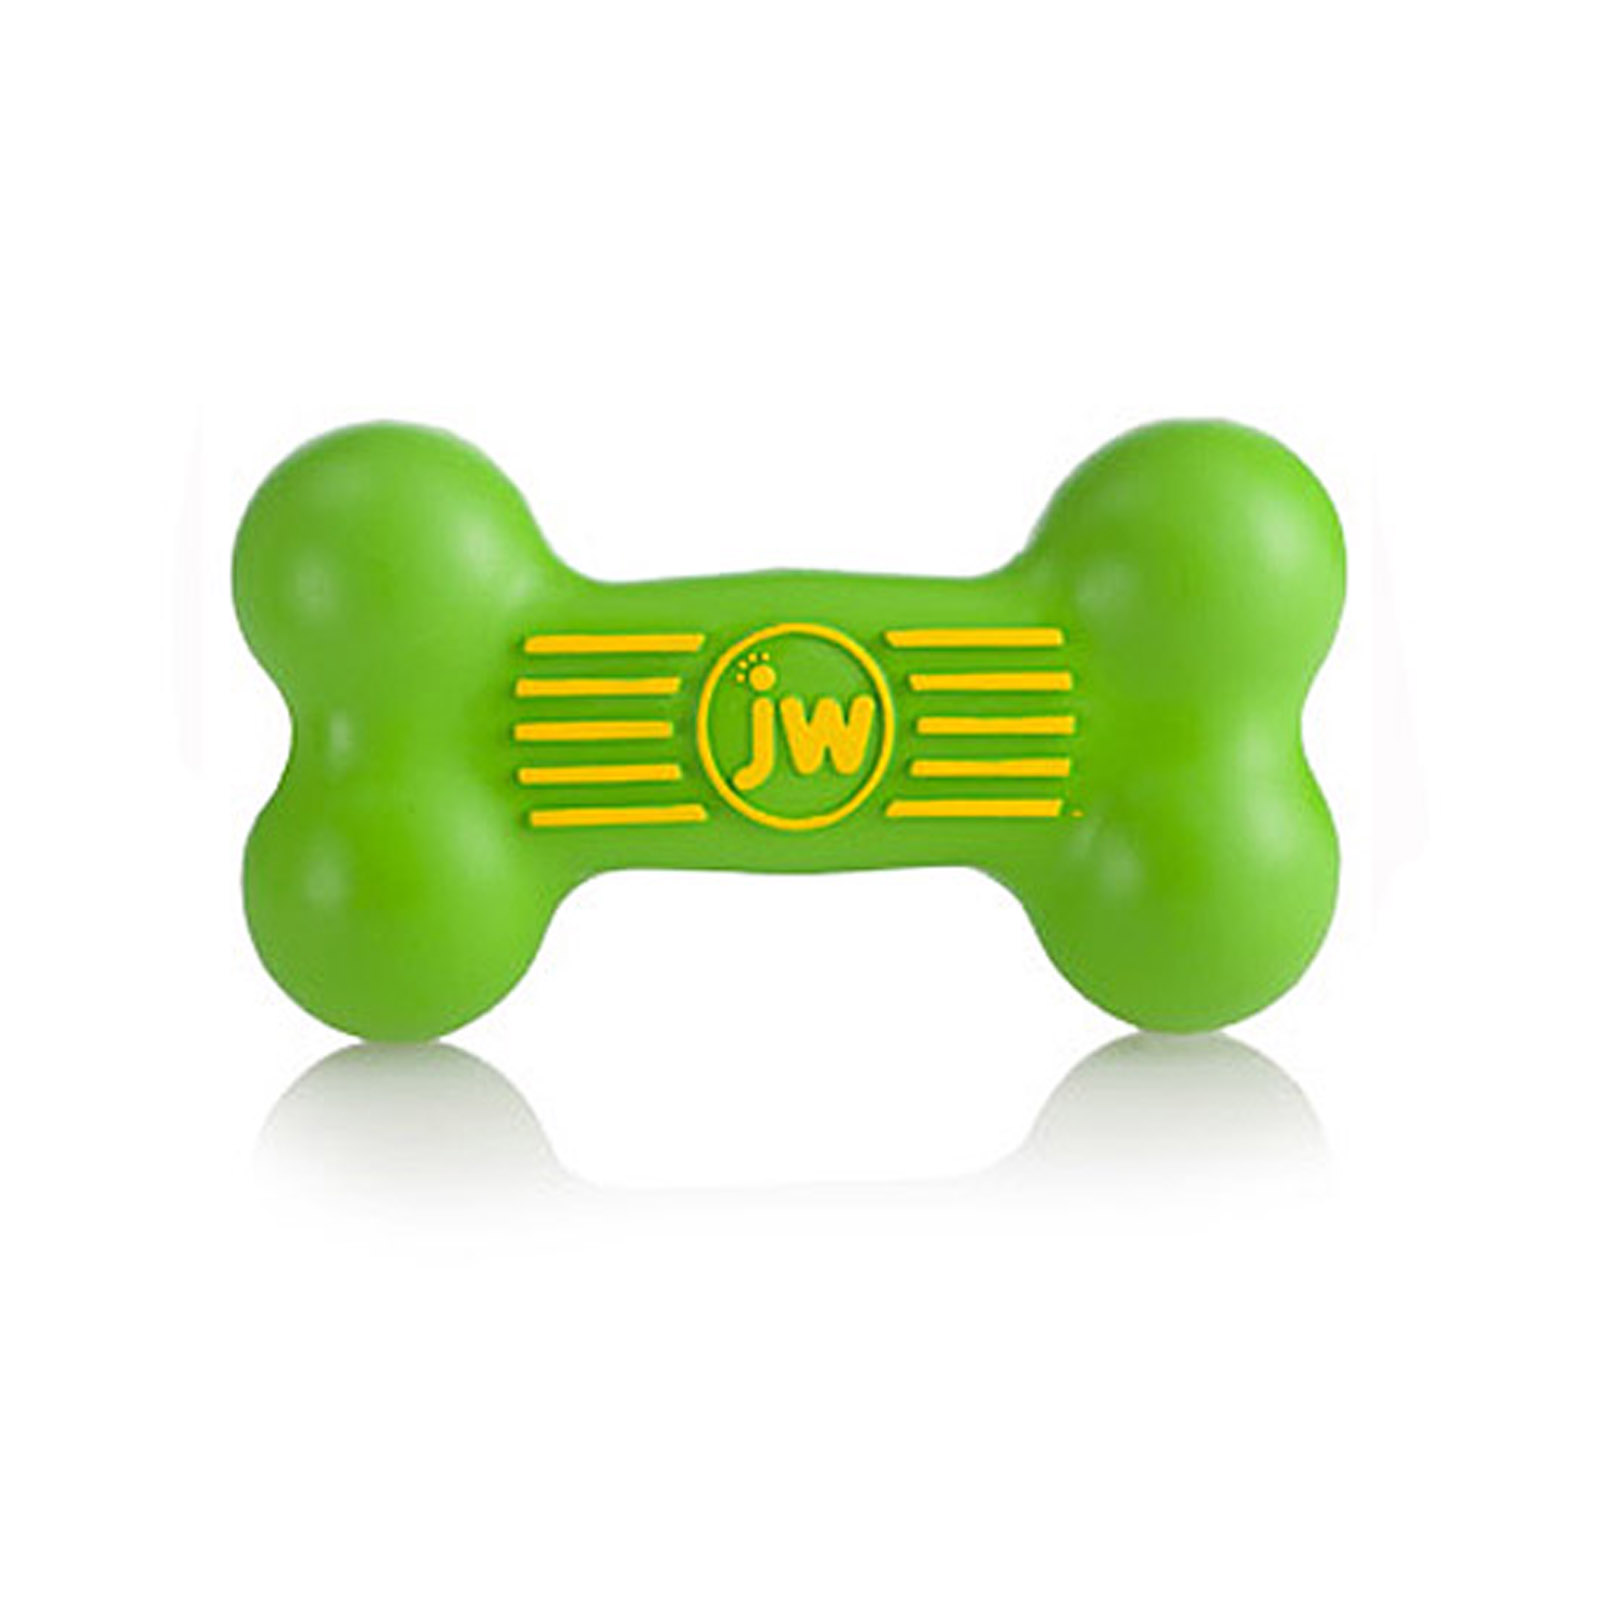 Jw Pet Company Toy Isqueak Bone Small